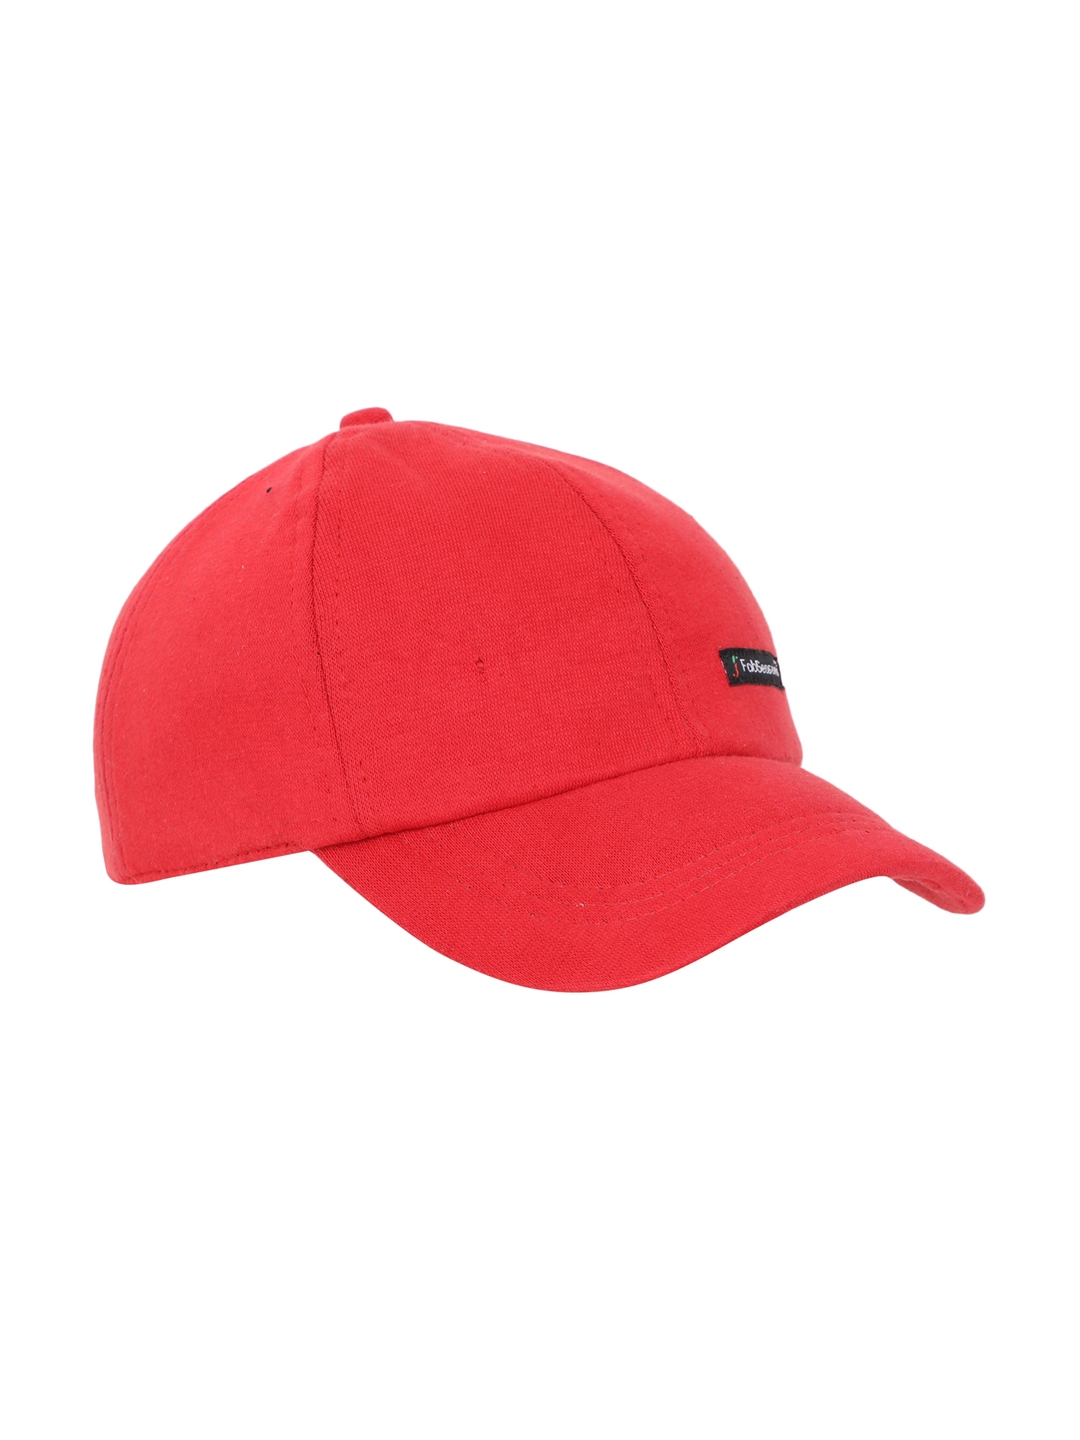 FabSeasons Unisex Red Solid Baseball Cap